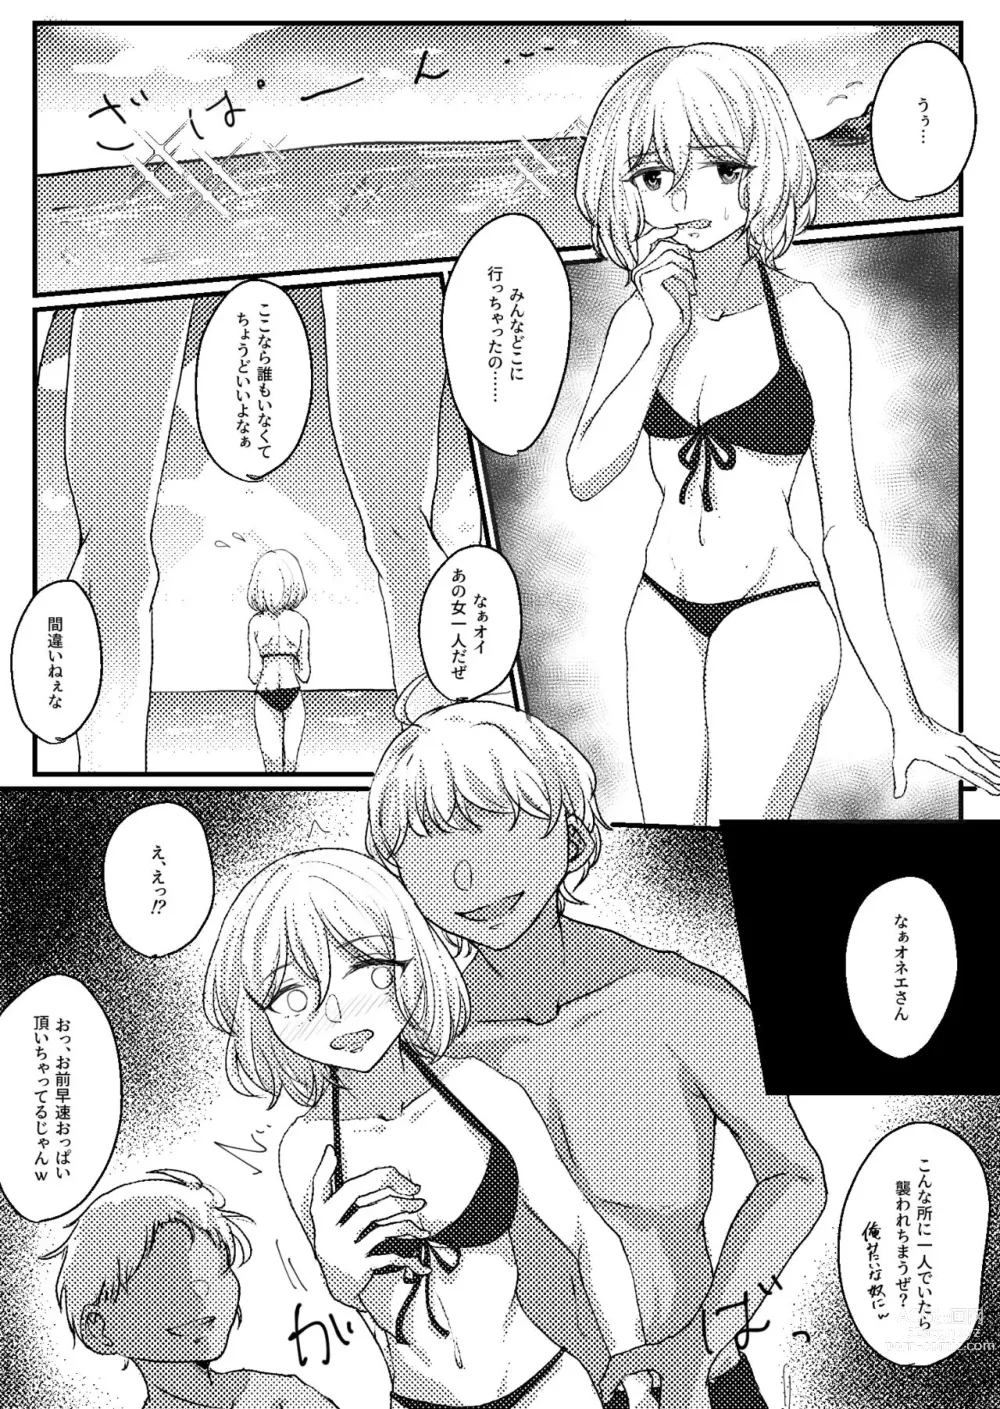 Page 1 of doujinshi Mashiro-chan MobRa